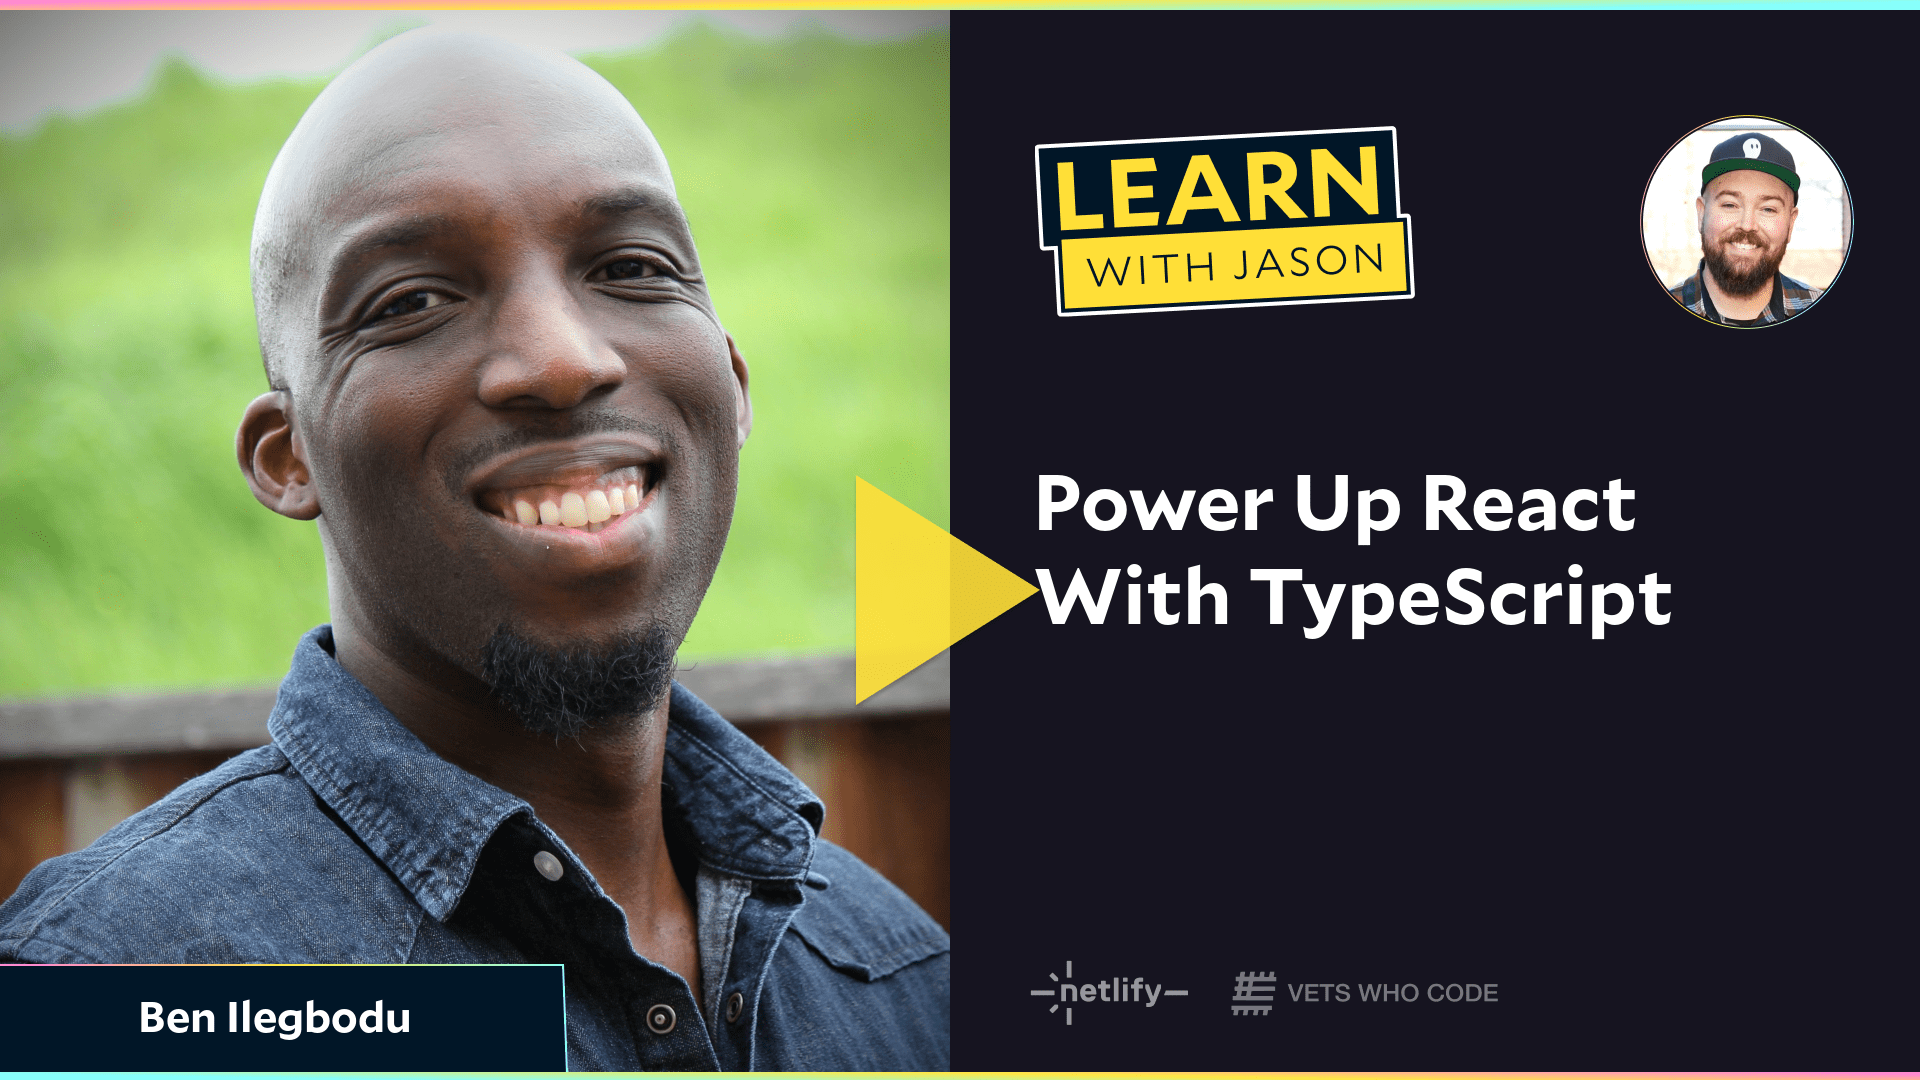 Power Up React With TypeScript (with Ben Ilegbodu)